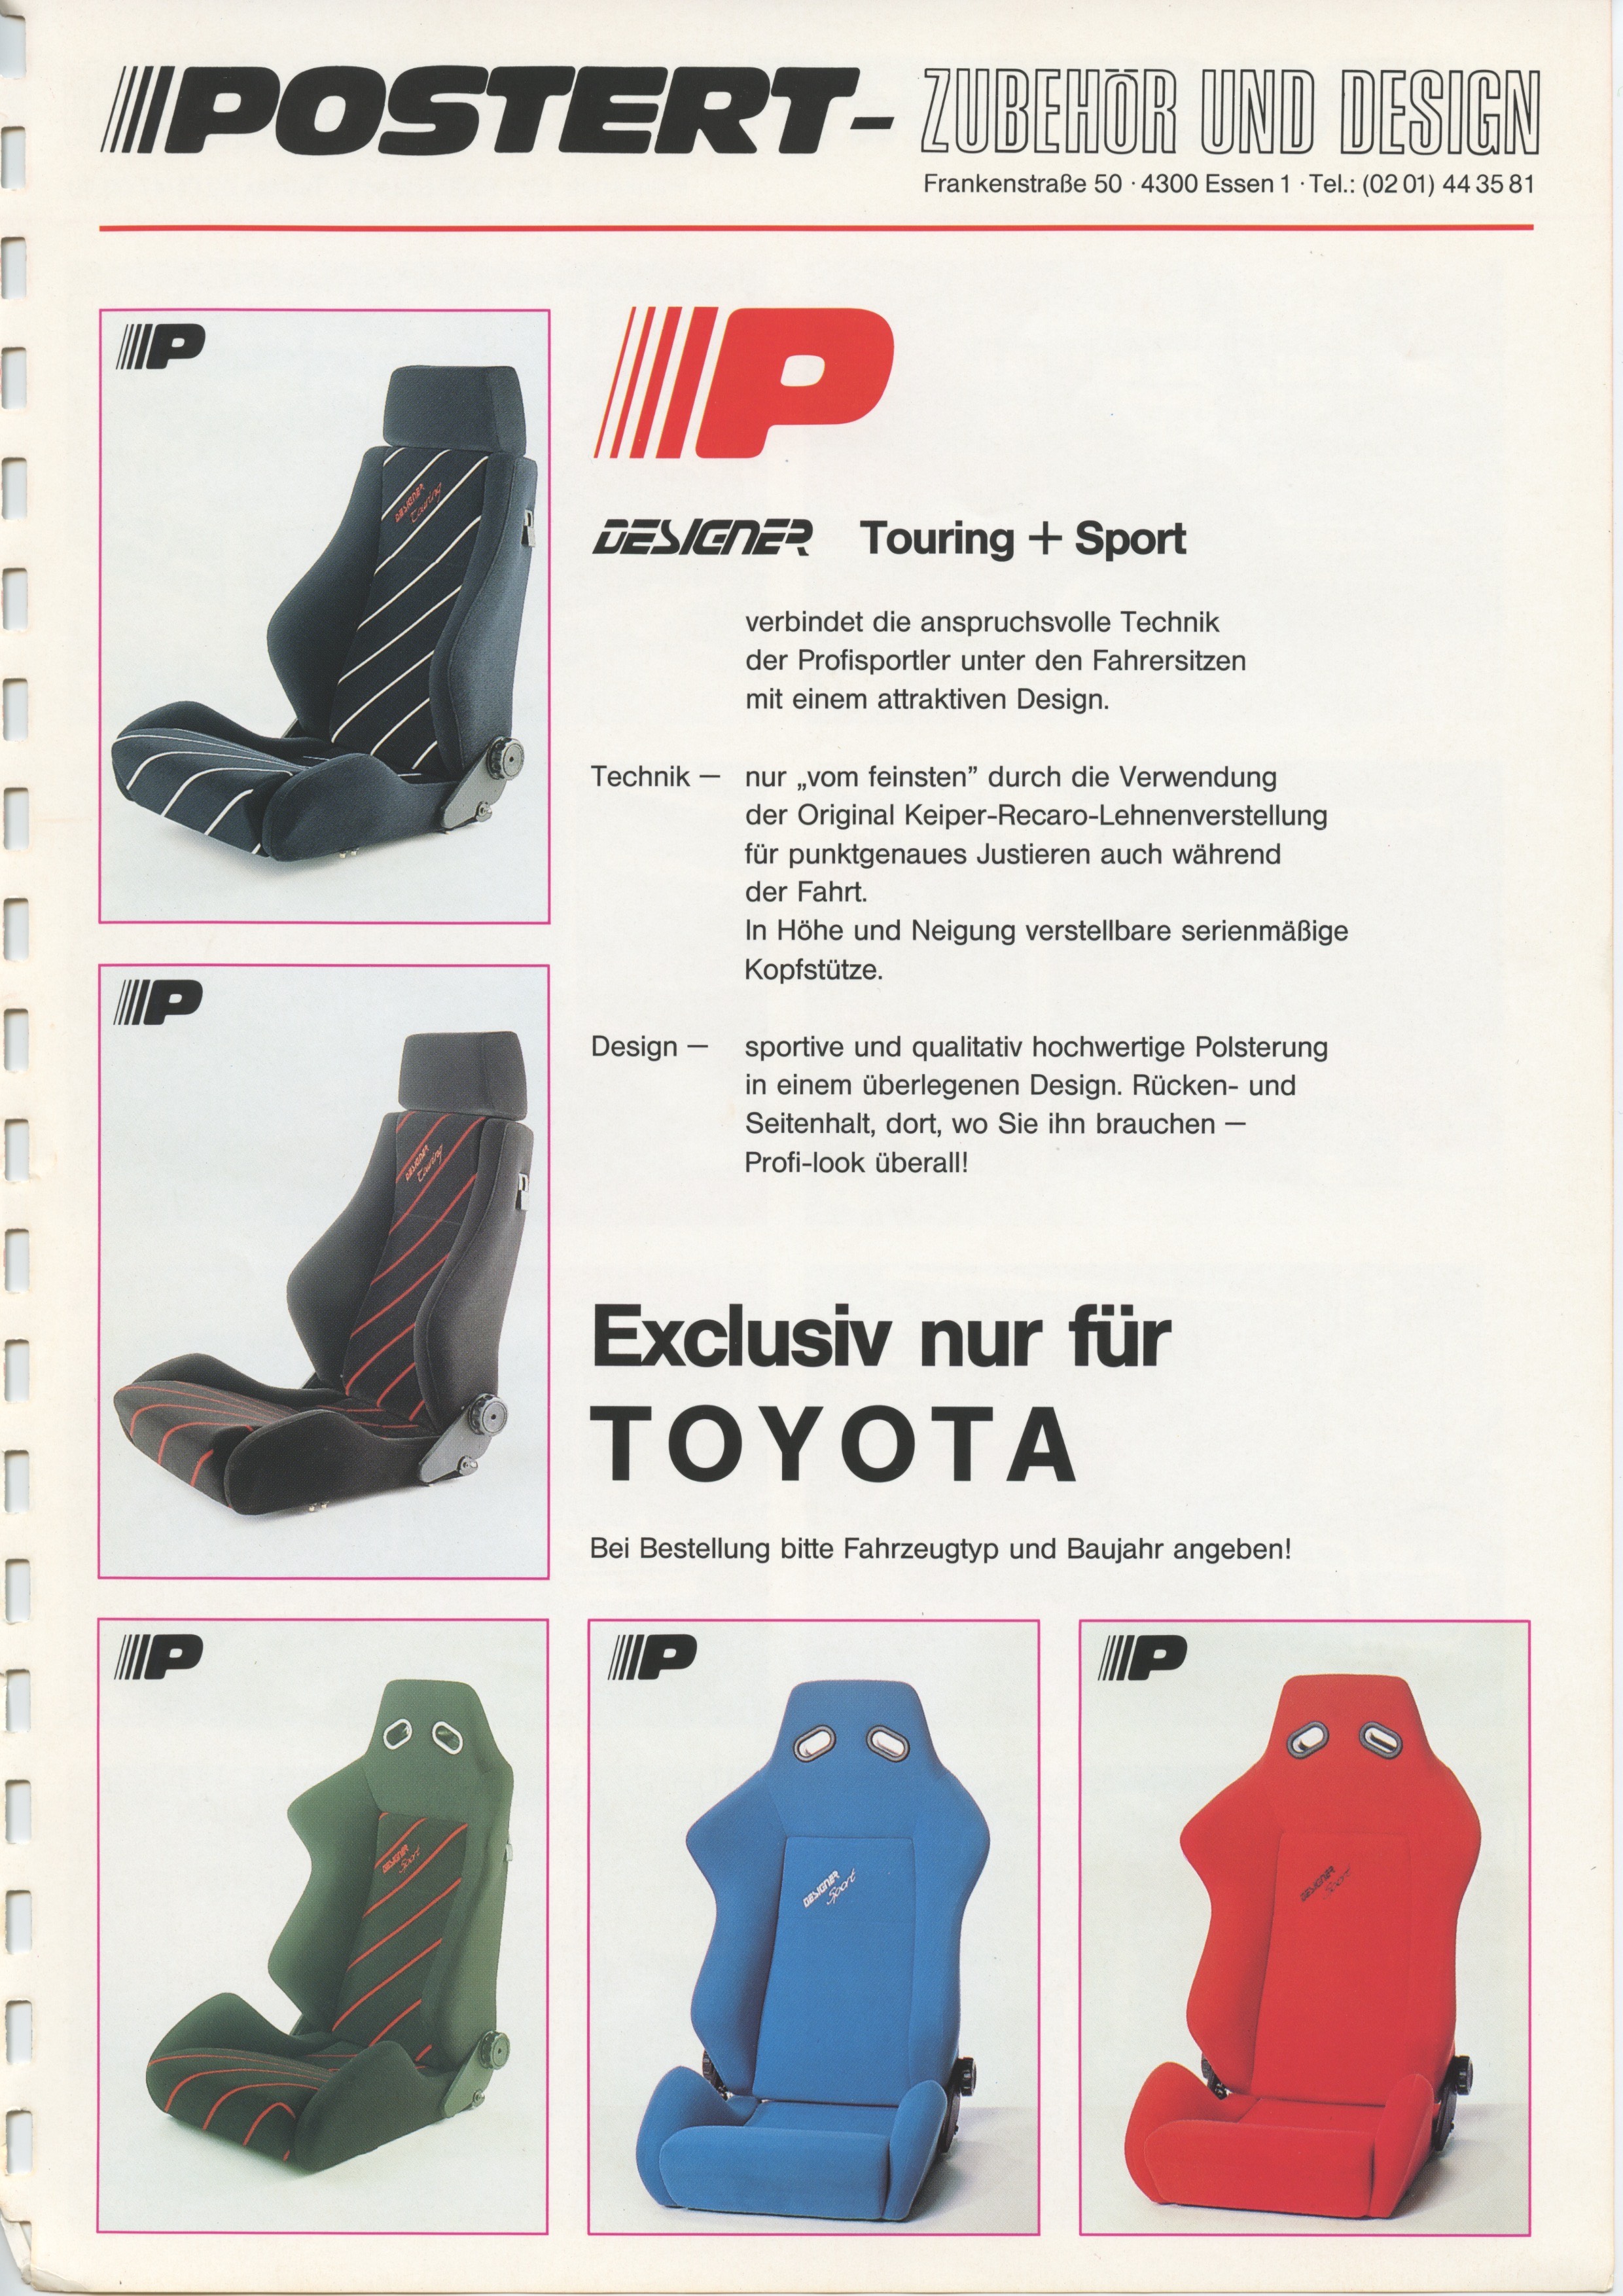 postert-catalogue-january-1988-page-41